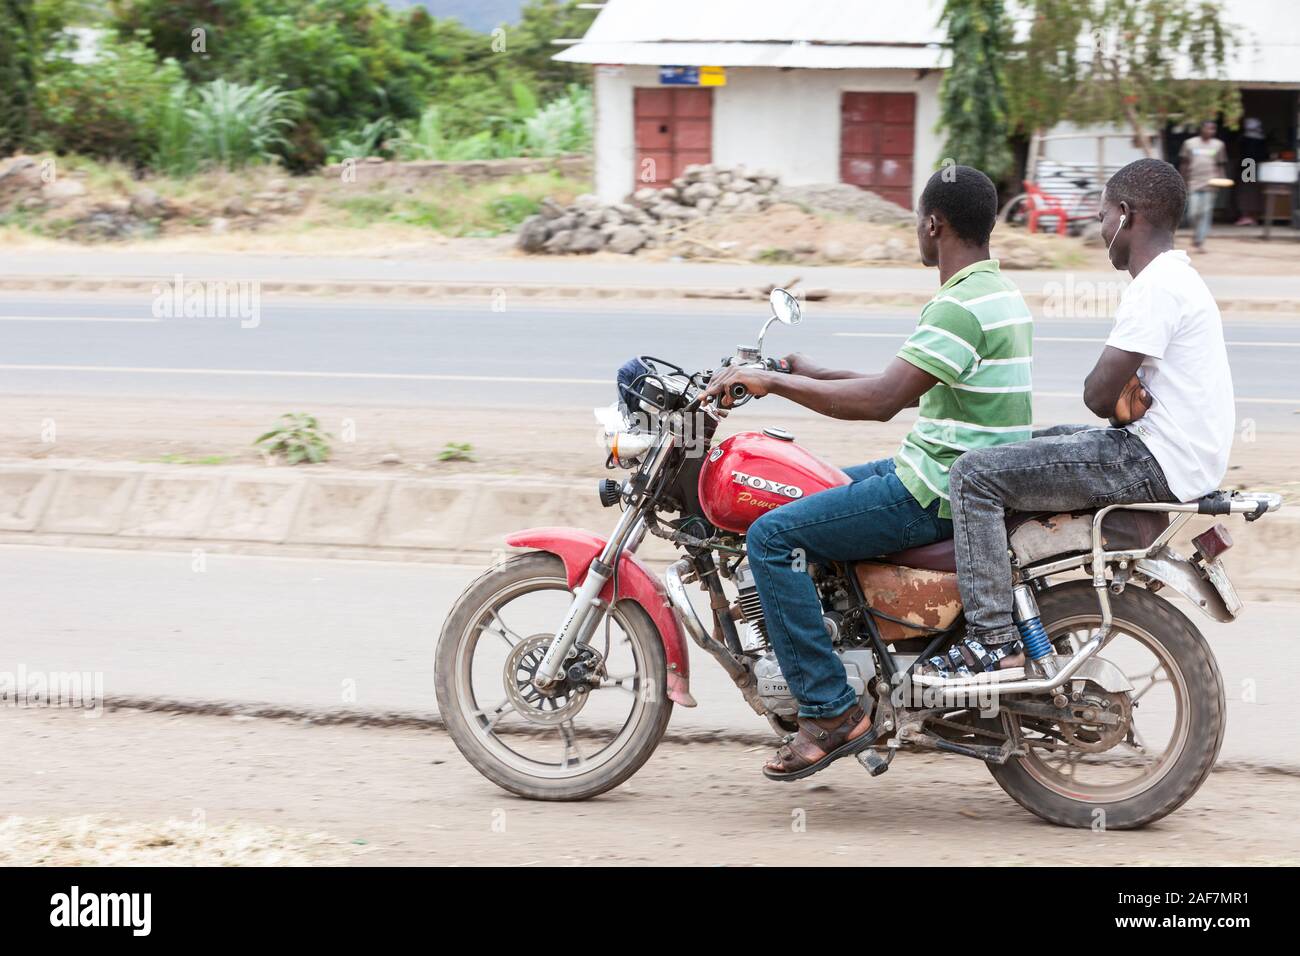 Tanzania, Mto wa Mbu Street Scene, Young Men on Motorbike, in Casual Clothing. Stock Photo